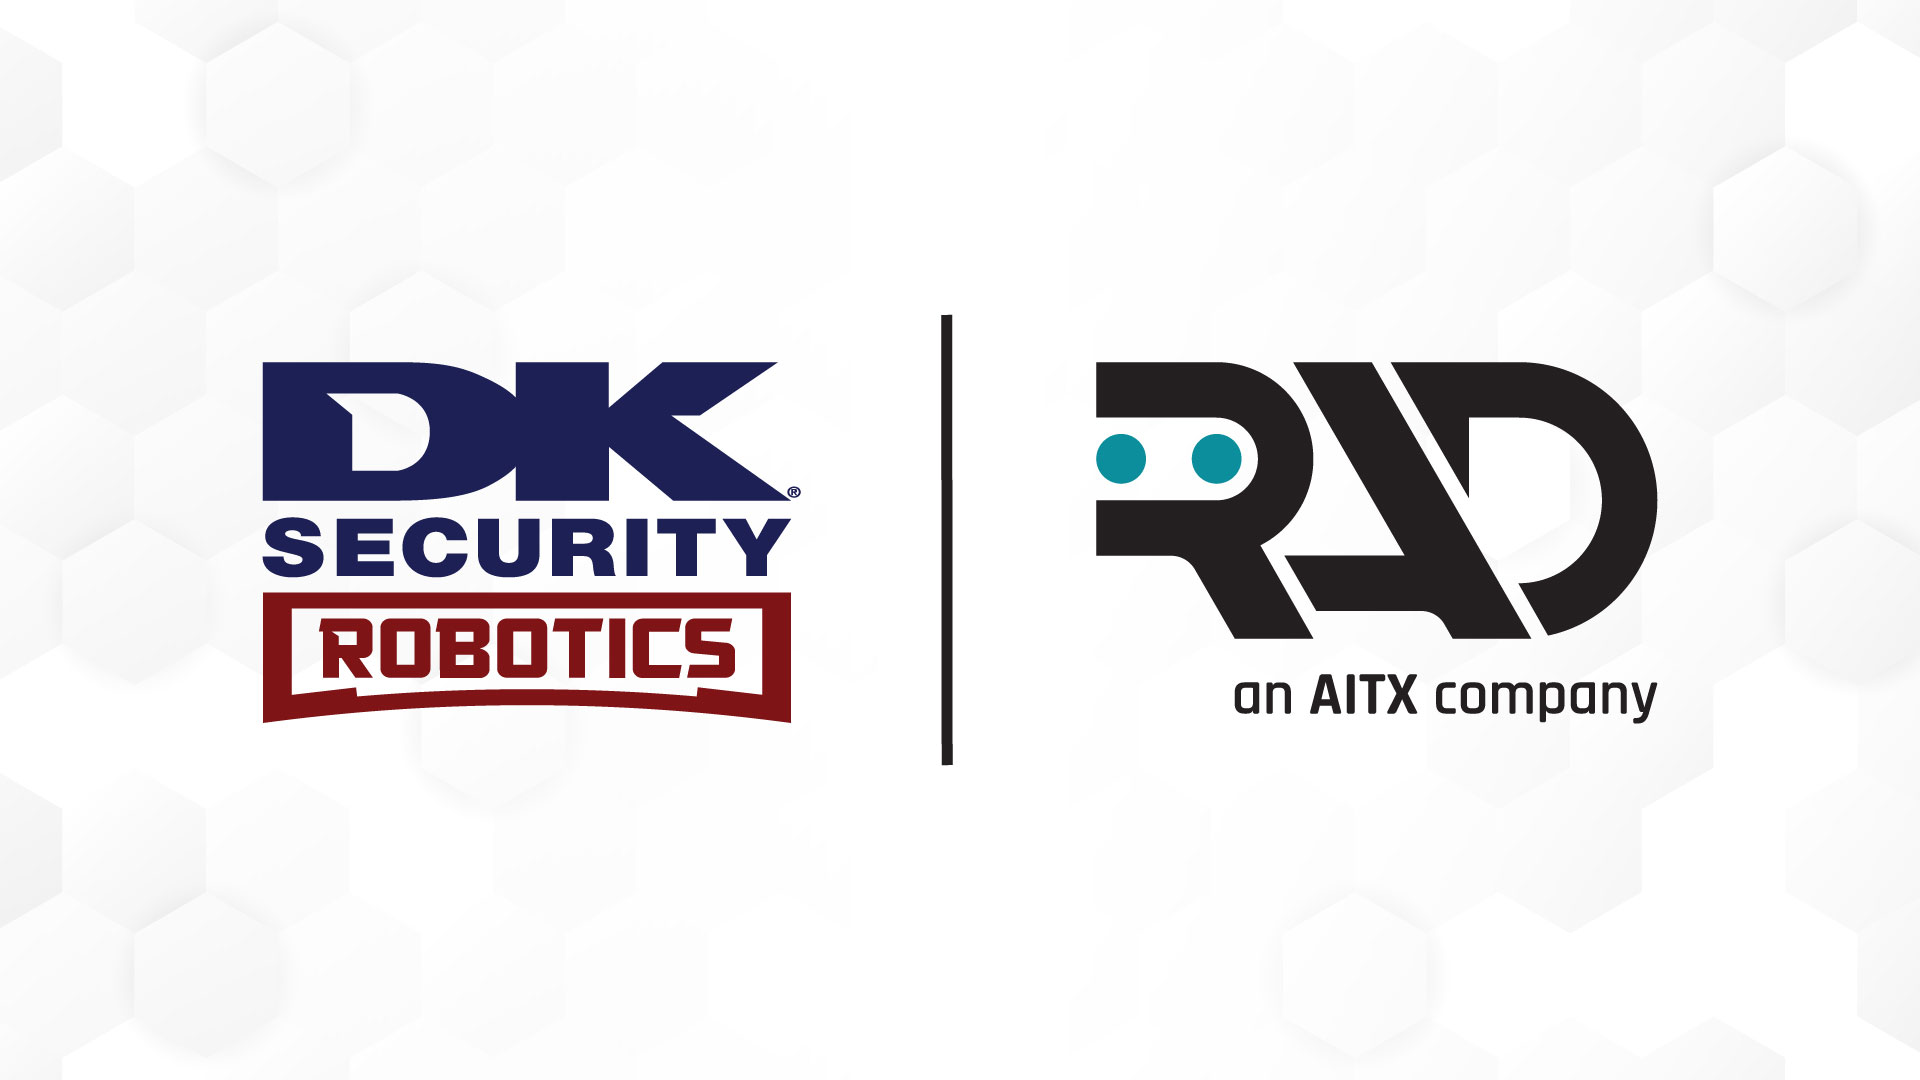 DK Security Robotics logo alongside Robotic Assistance Devices logo